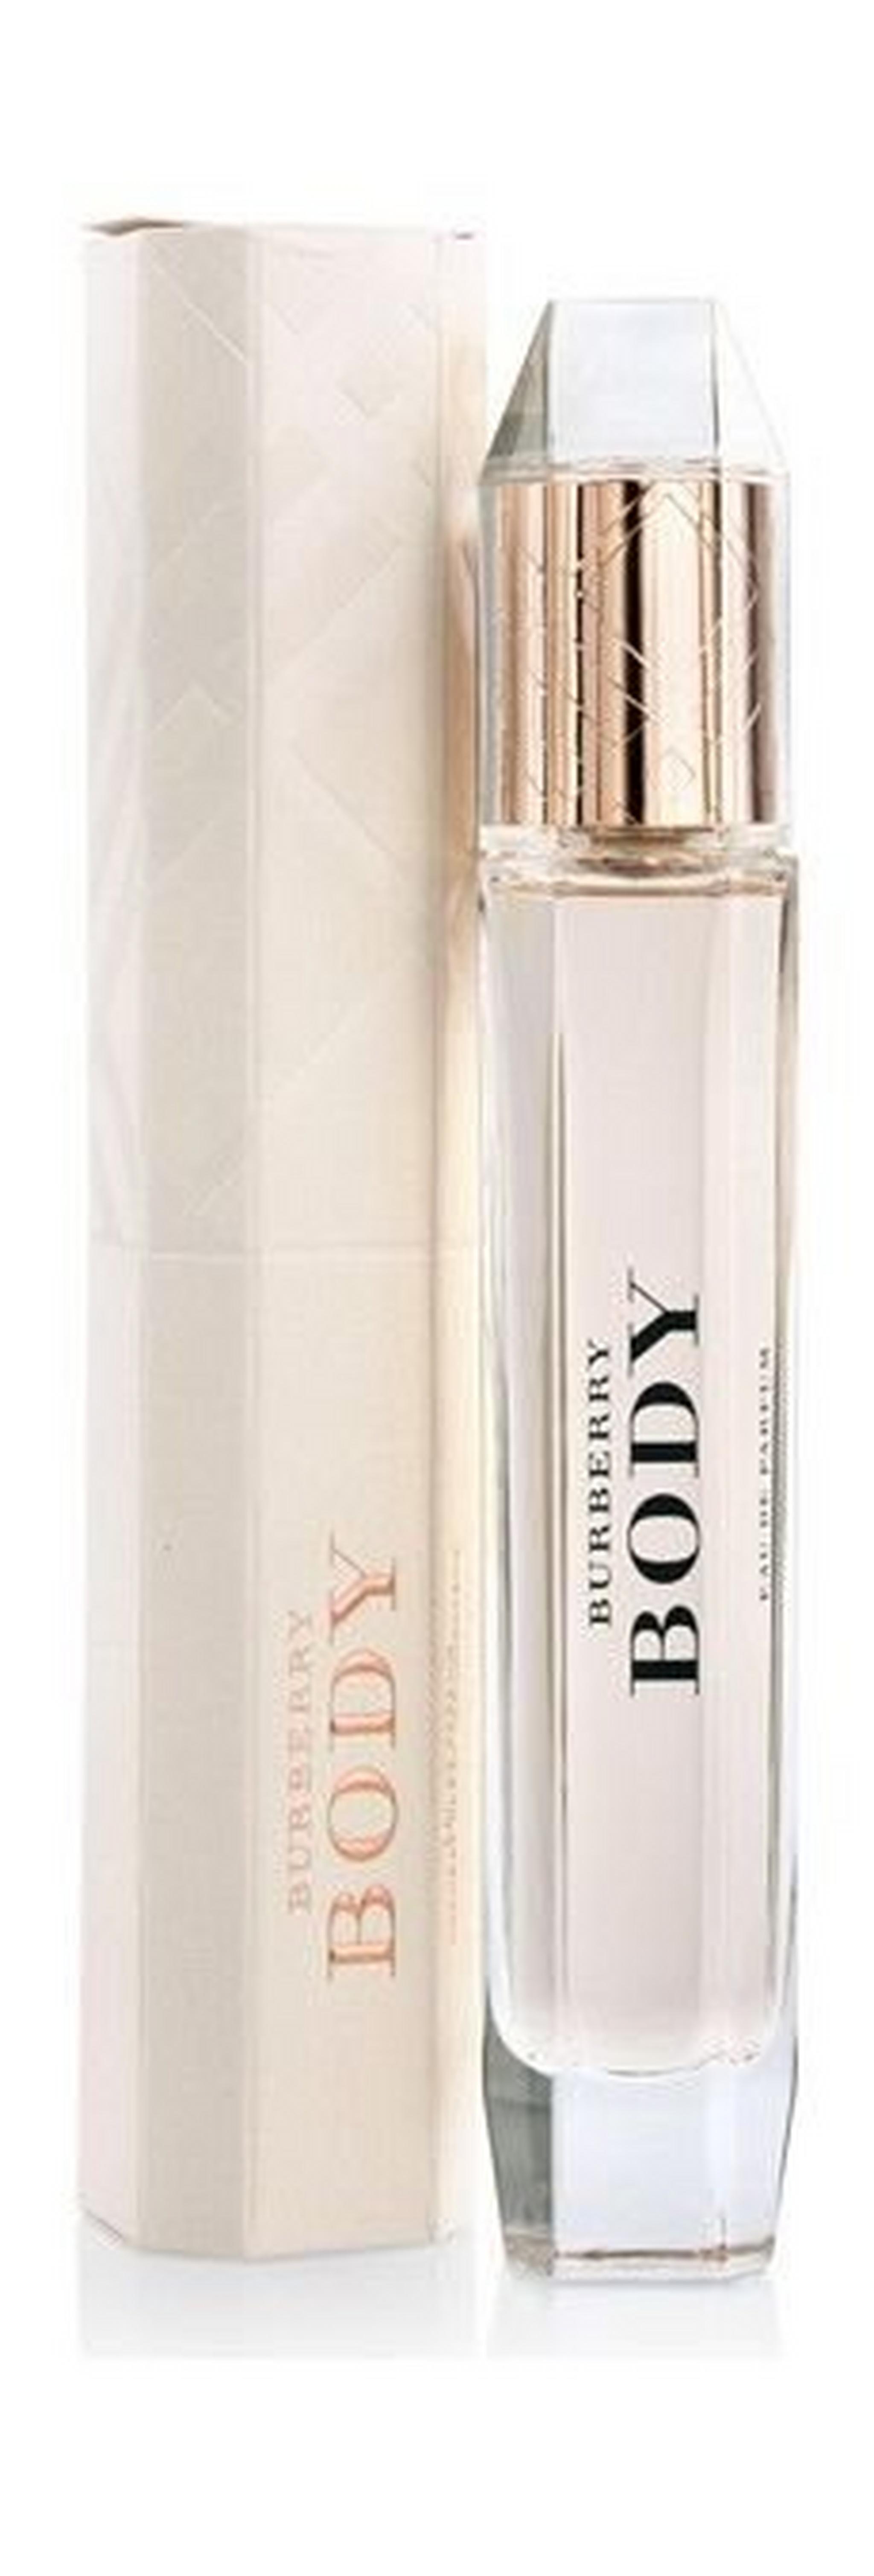 BURBERRY Body Intense - Eau de Parfum 80 ml